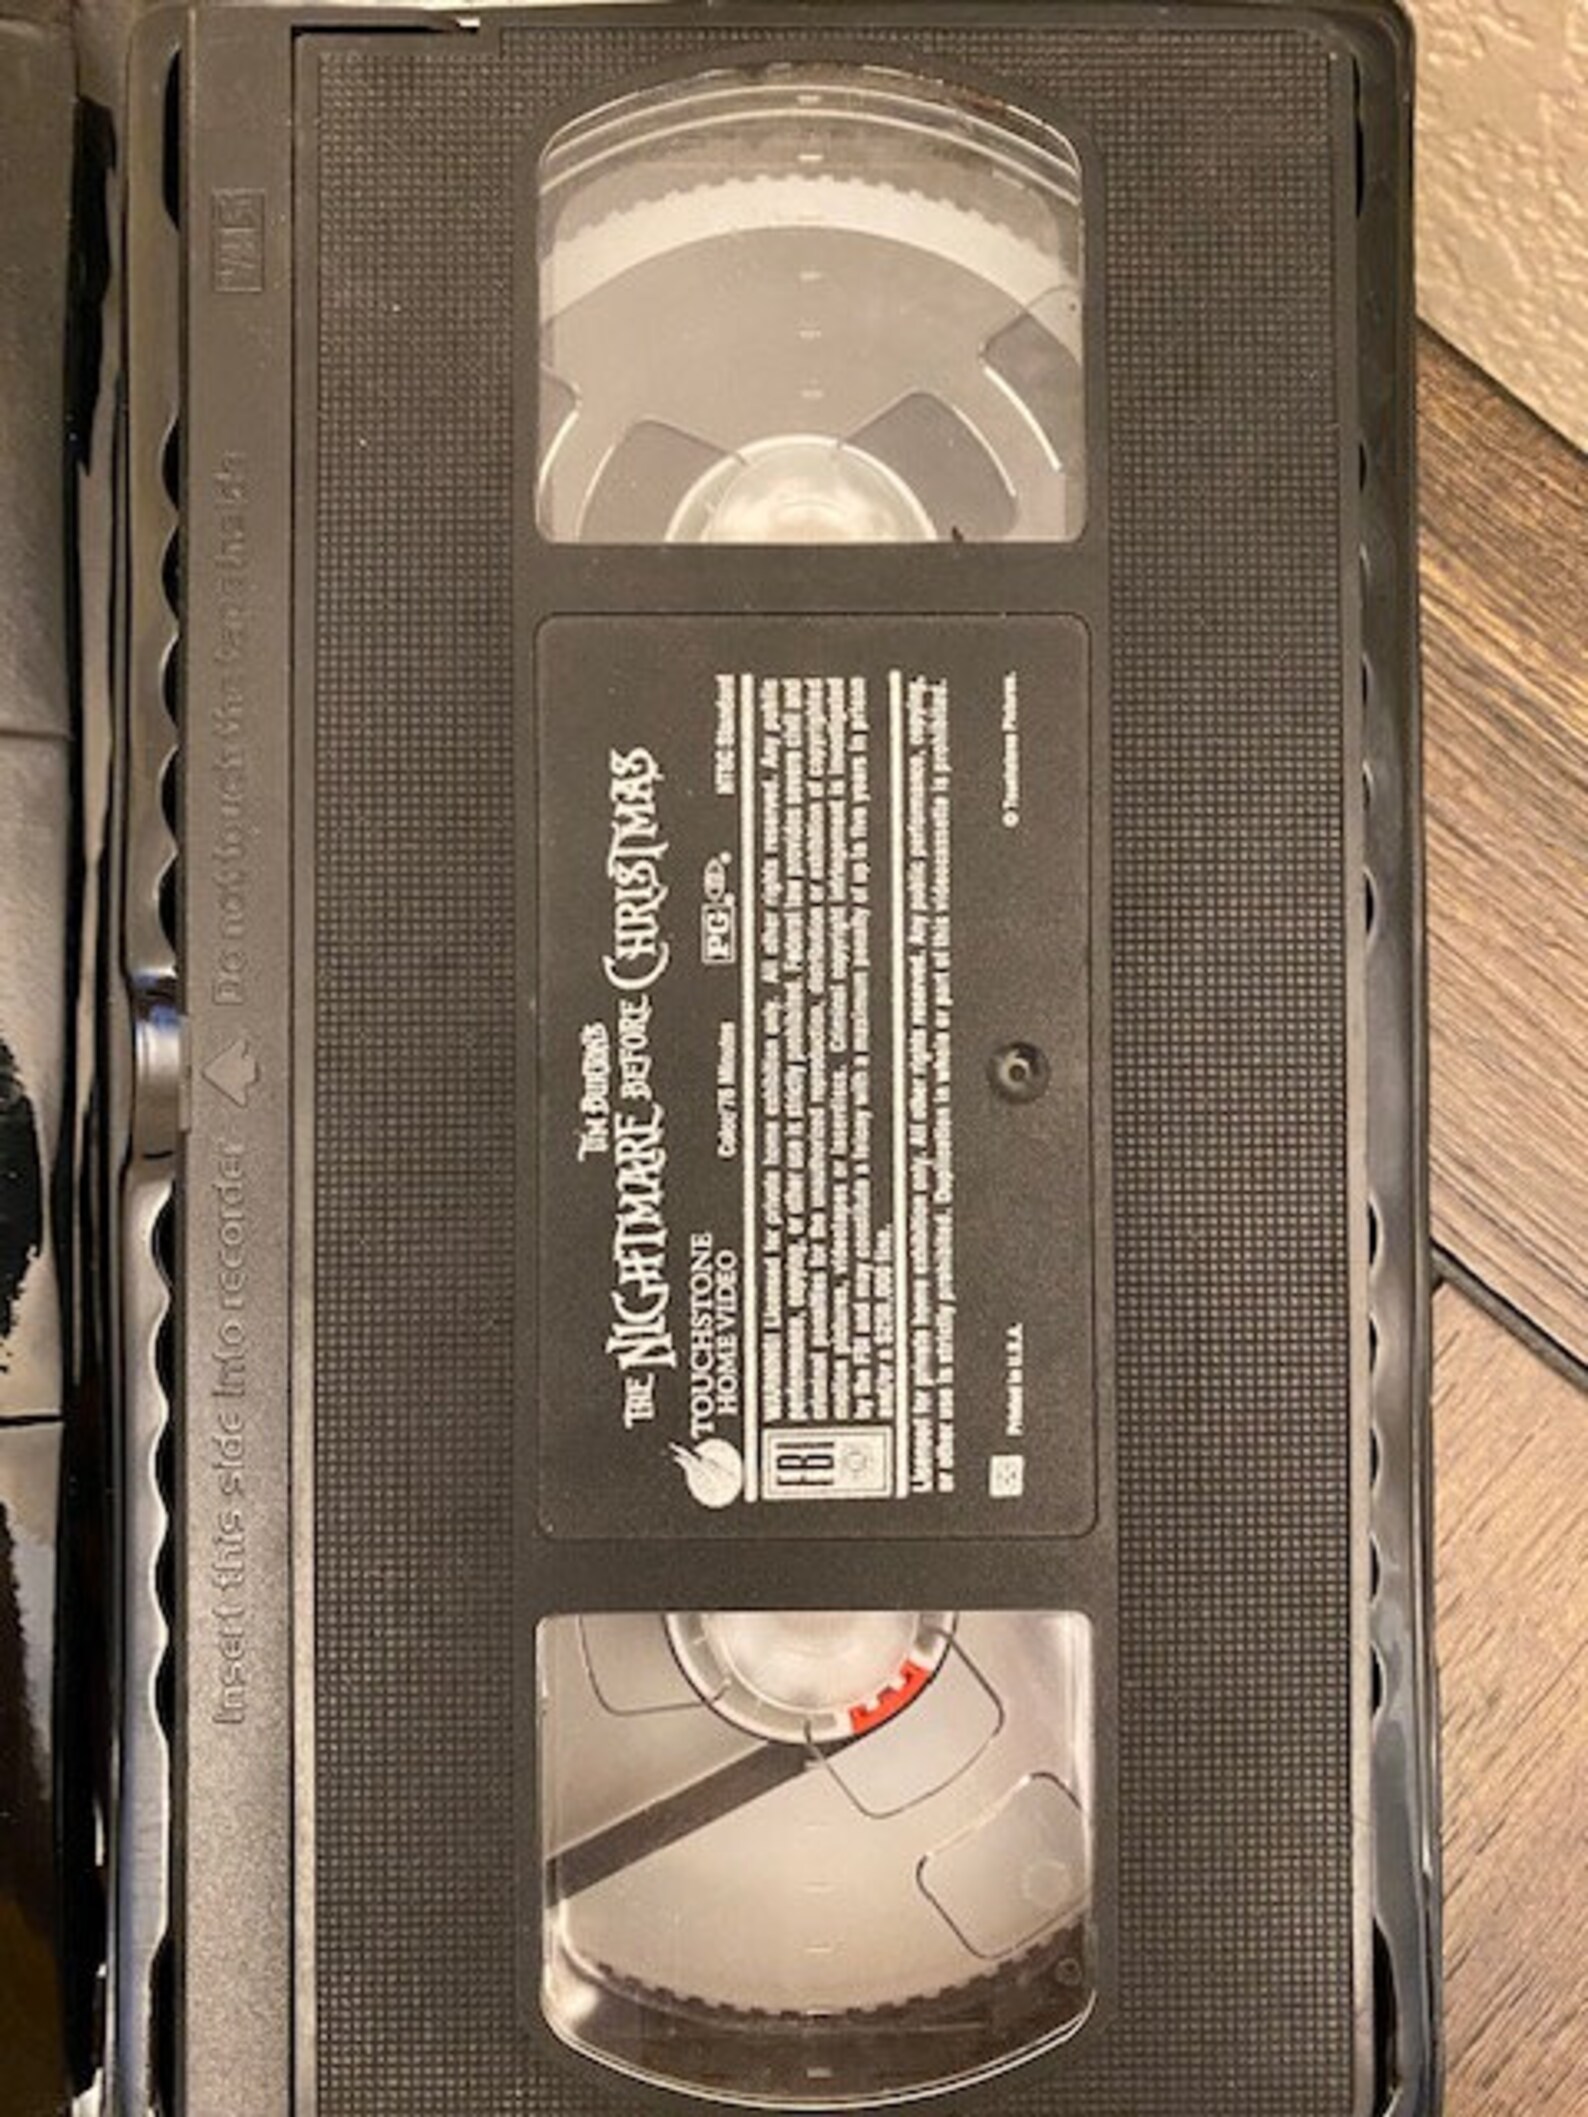 Tim Burton's The Nightmare Before Christmas VHS Tape | Etsy